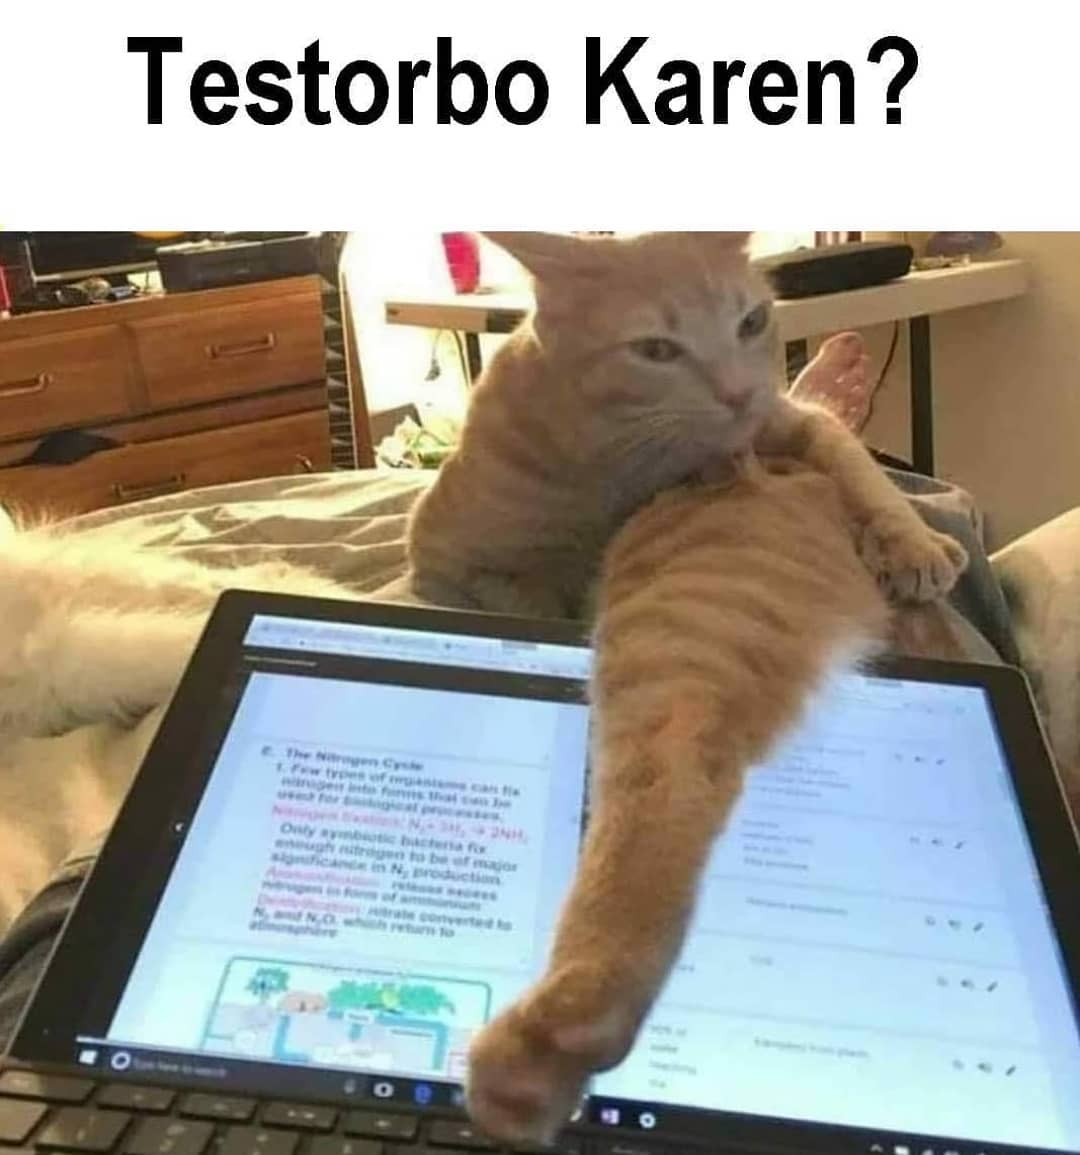 Testorbo Karen?